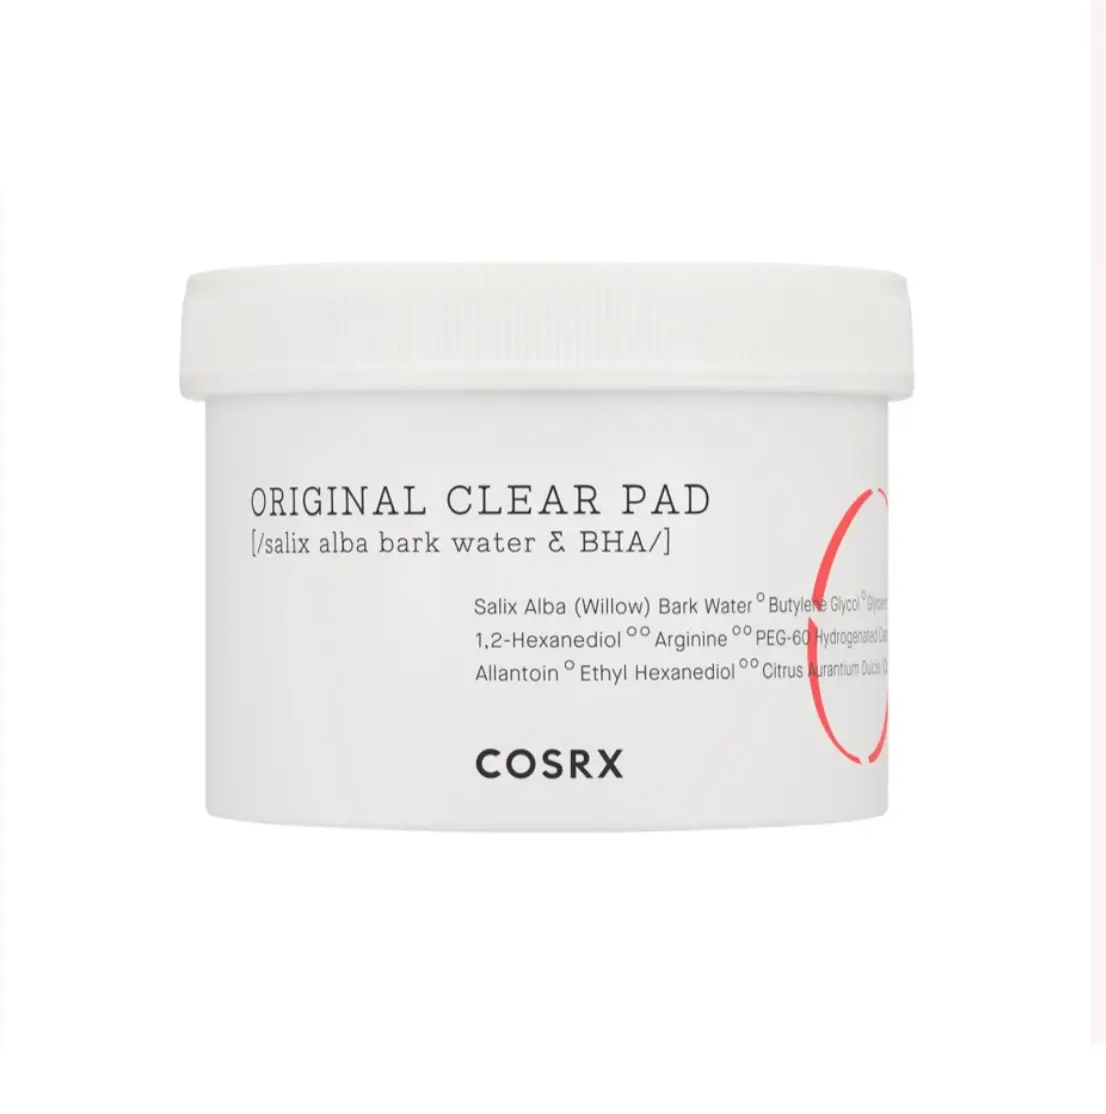 Best Korean skincare exfoliator - COSRX One Step Original Clear Pad